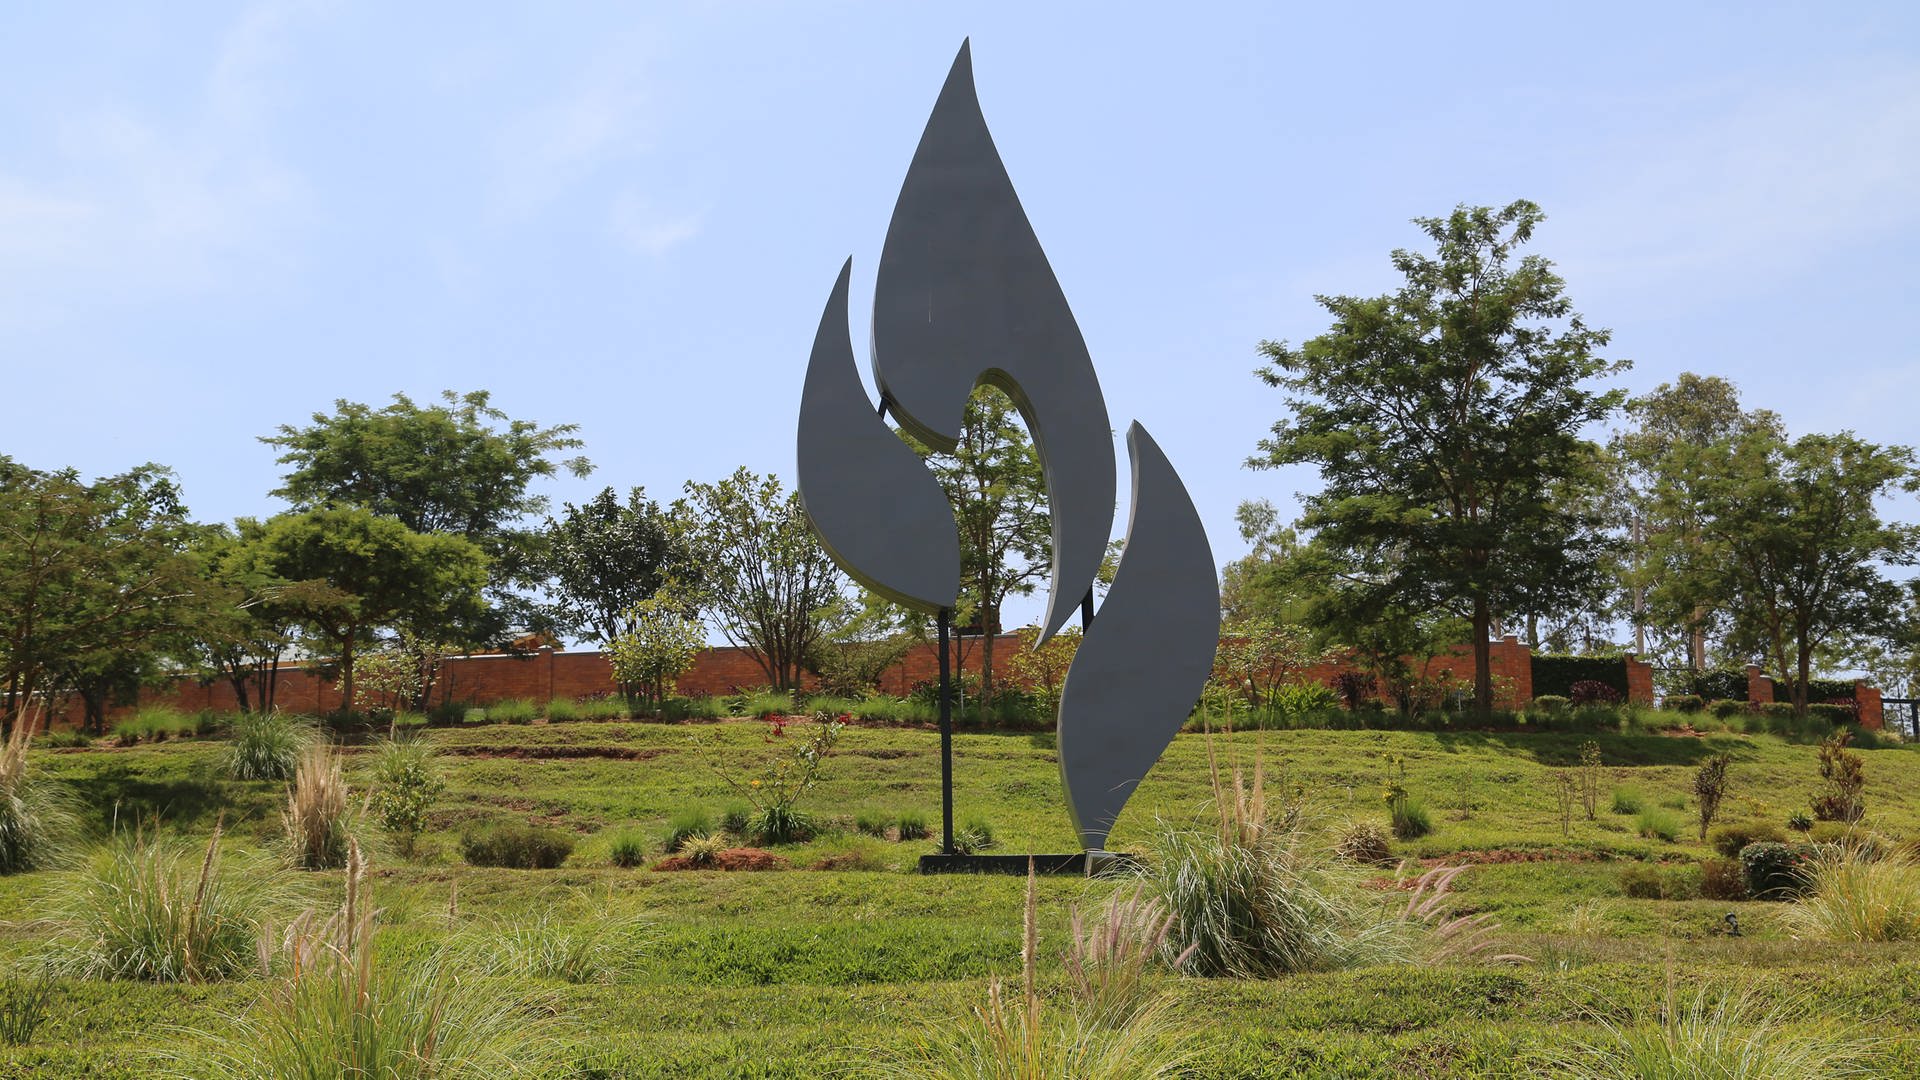 30 Jahre nach dem Völkermord: Ministerpräsidentin Dreyer reist nach Ruanda